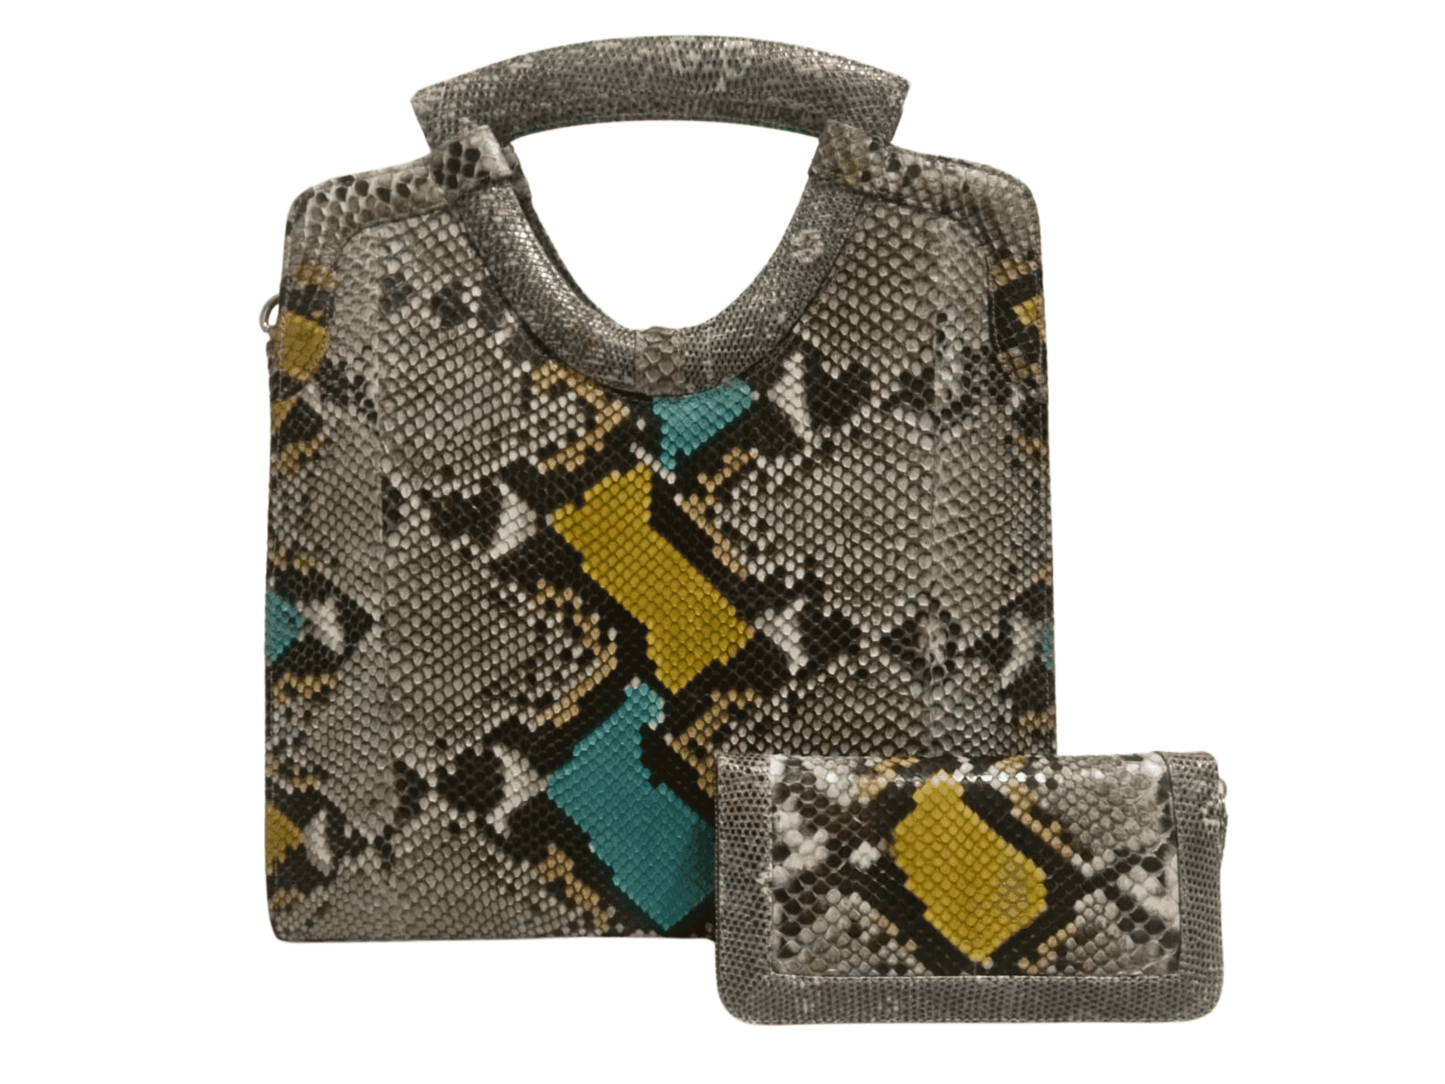 Tote Python Snakeskin Women Bag with Natural Lizard Skin Trim Gray Python Jacket by LFM Fashion